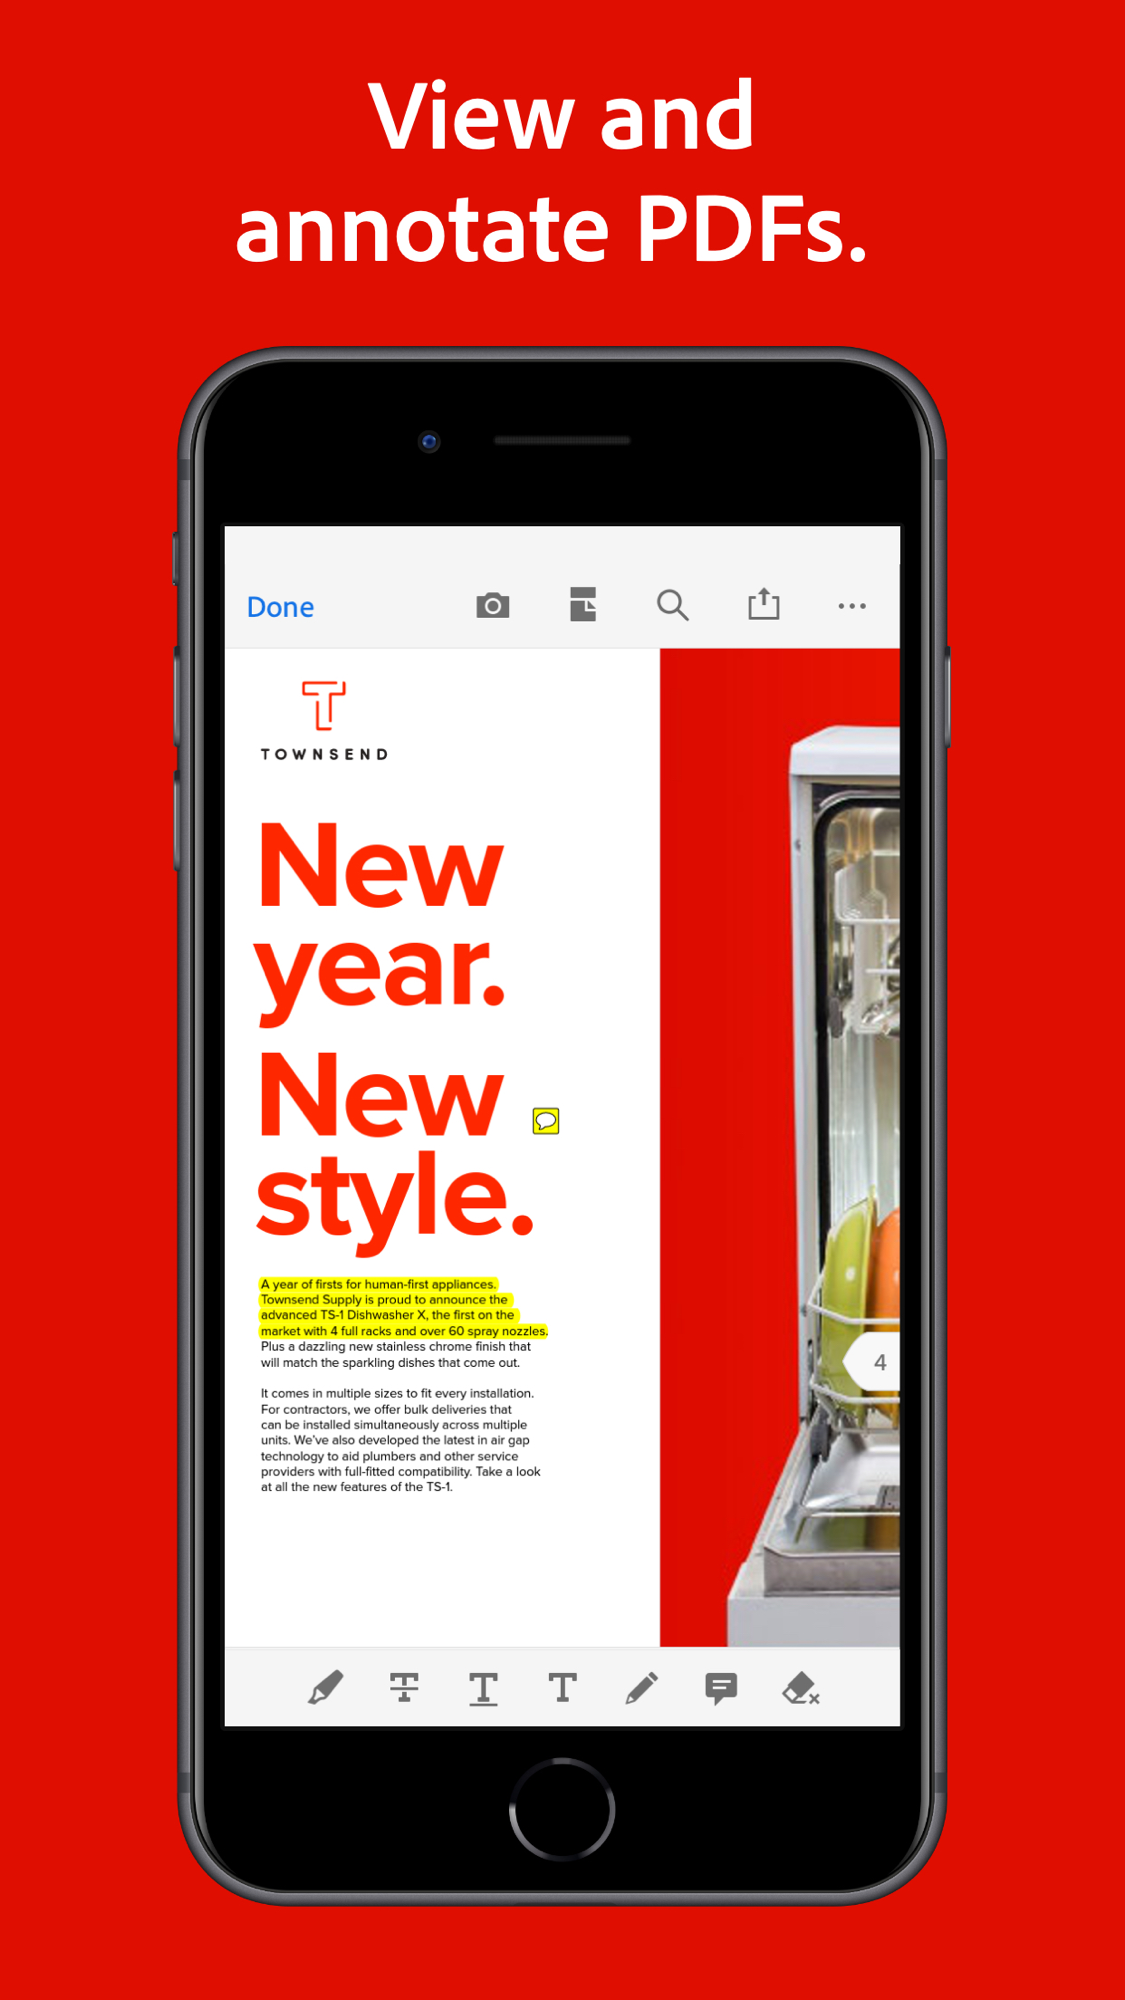 Adobe Acrobat Reader for PDF  Featured Image for Version 